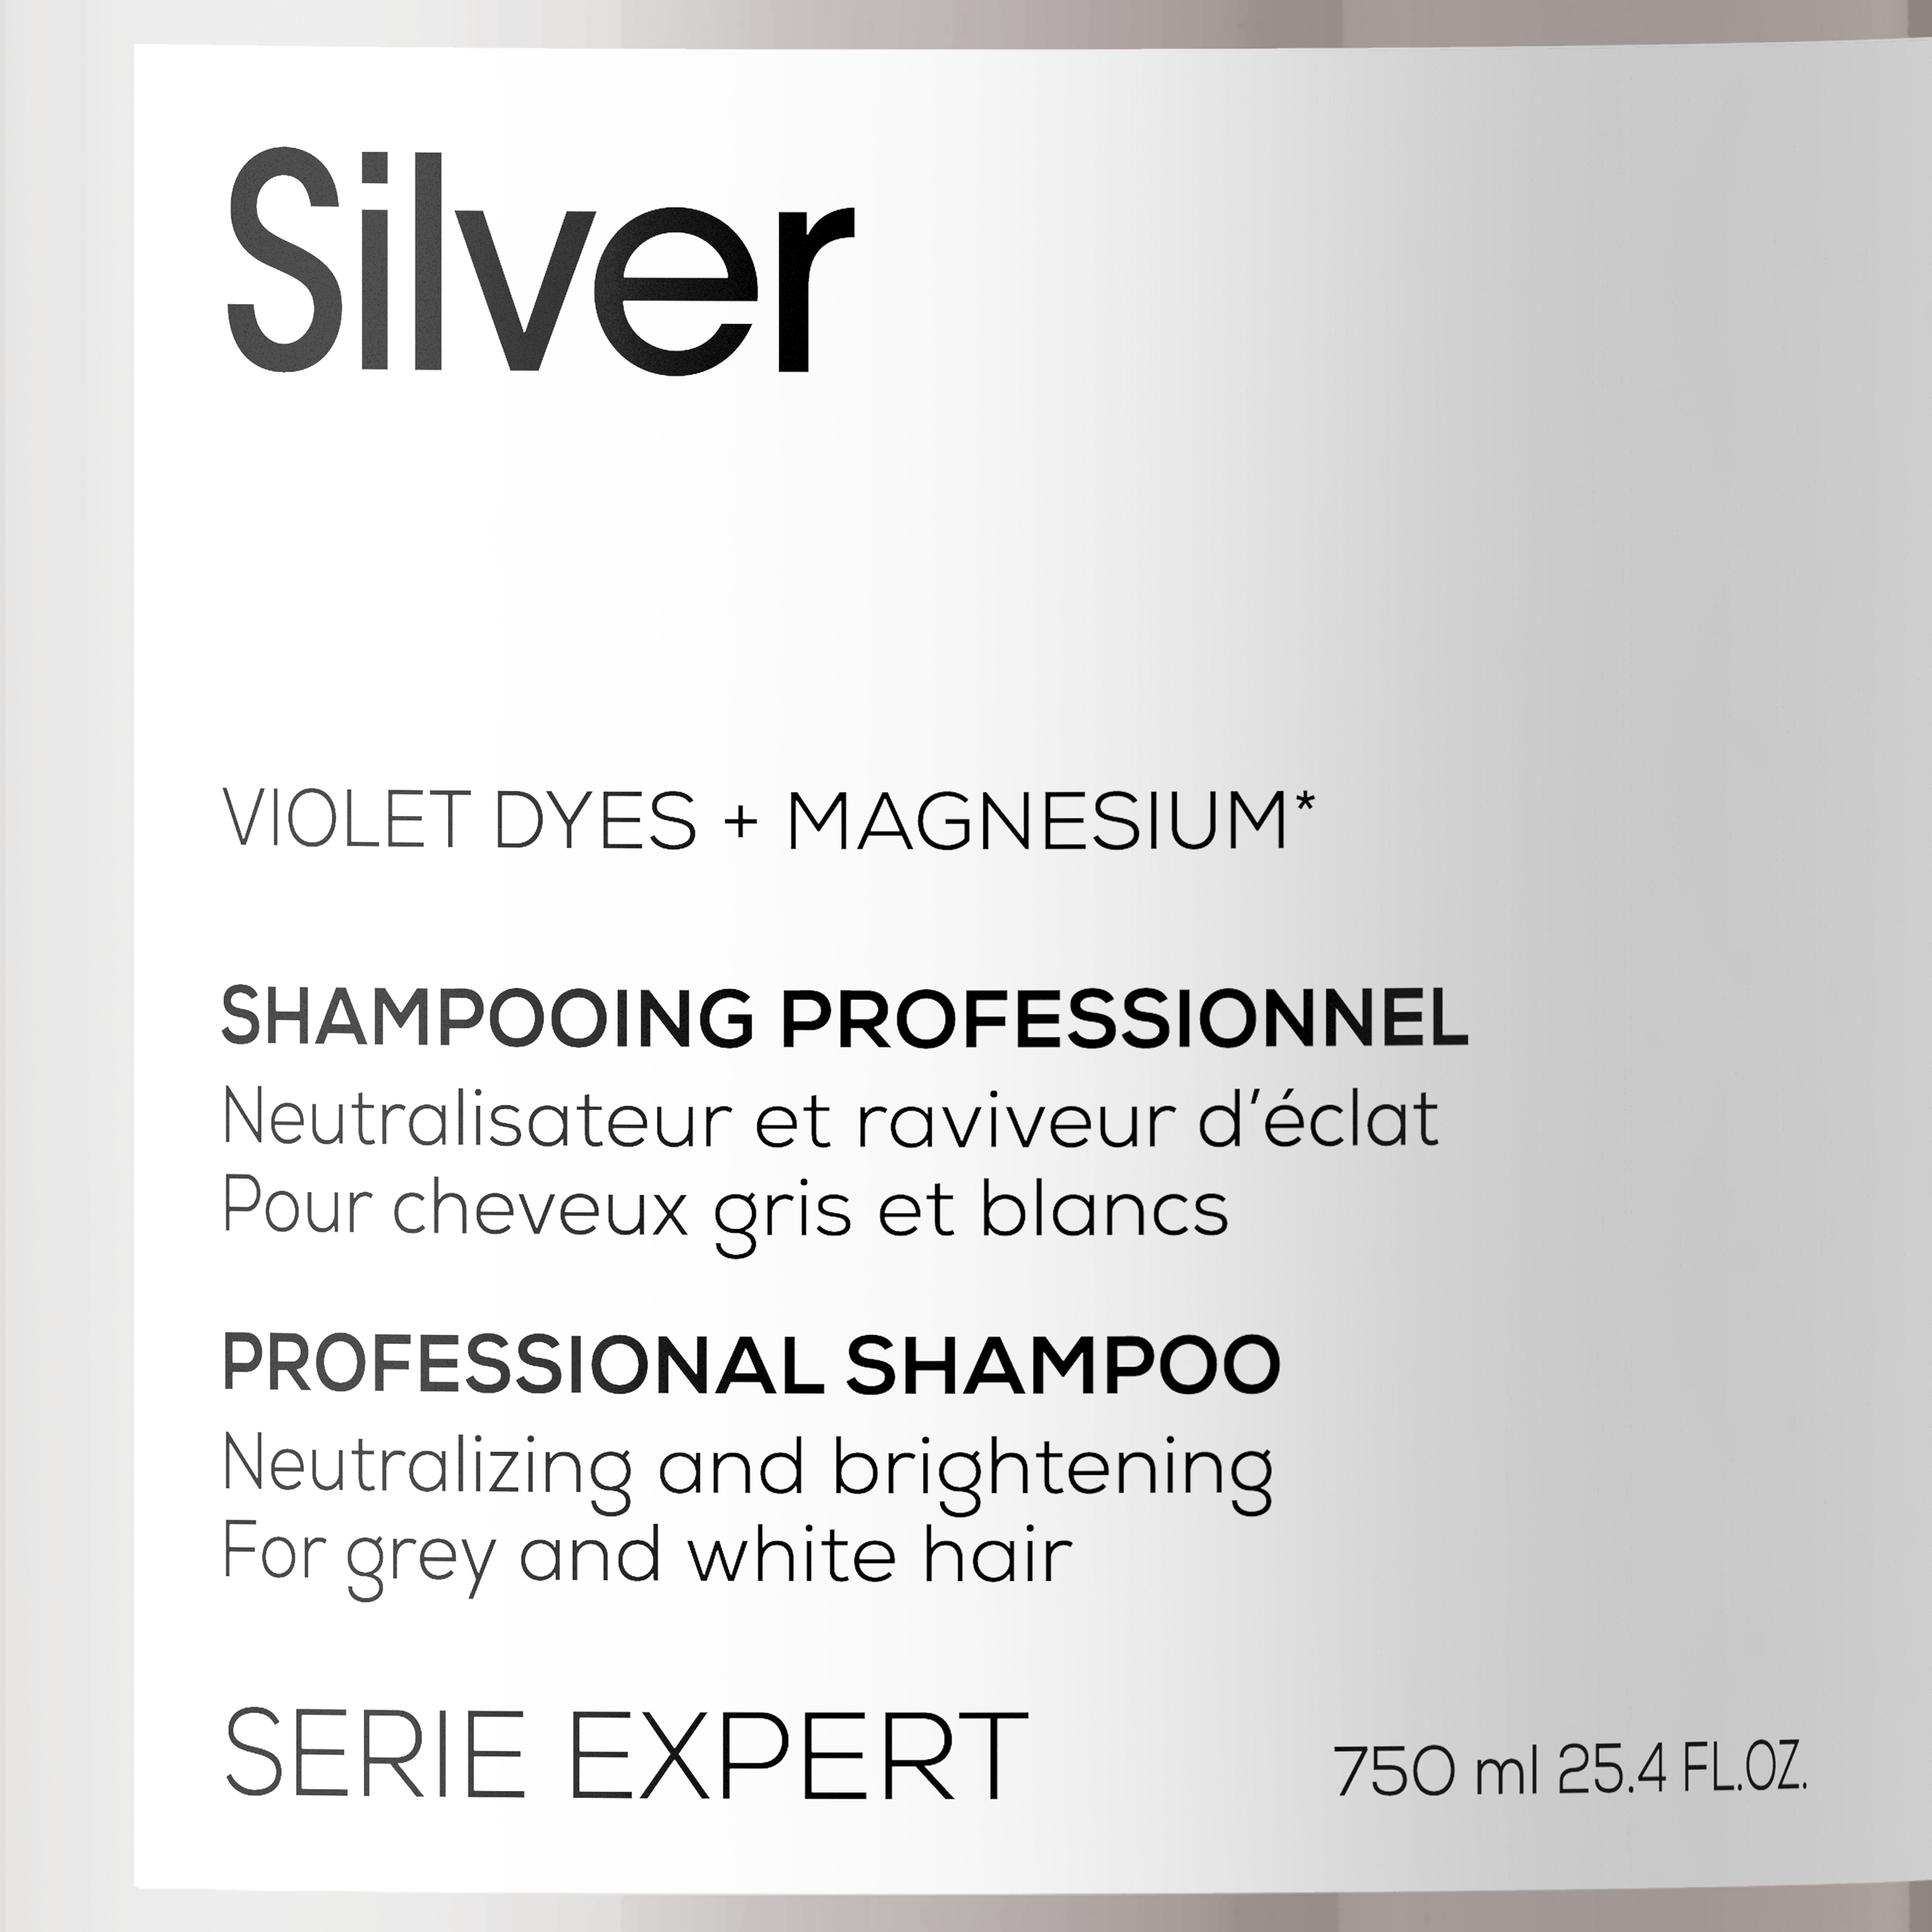 L'Oréal Professionnel Shampoo Champú Silver 1500ml Roberta Beauty Club Tienda Online Productos de Peluqueria